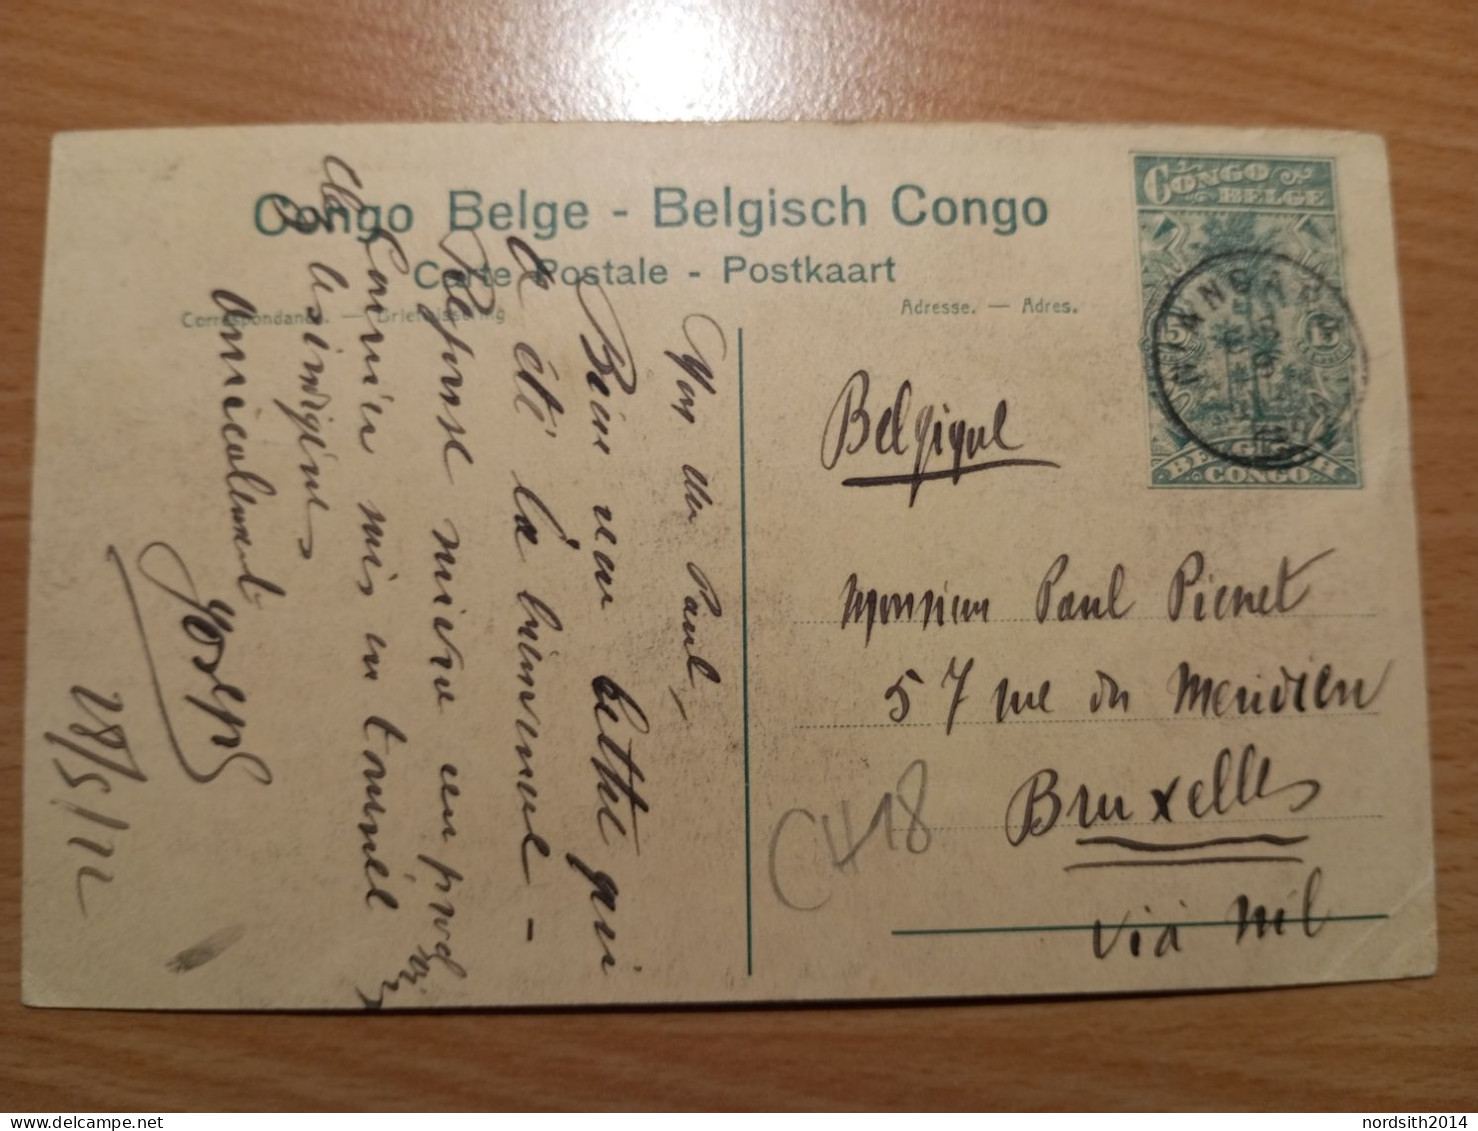 Congo Belge - Katanga -  Fabricant D'etoffes Wahutu - Congo Belge